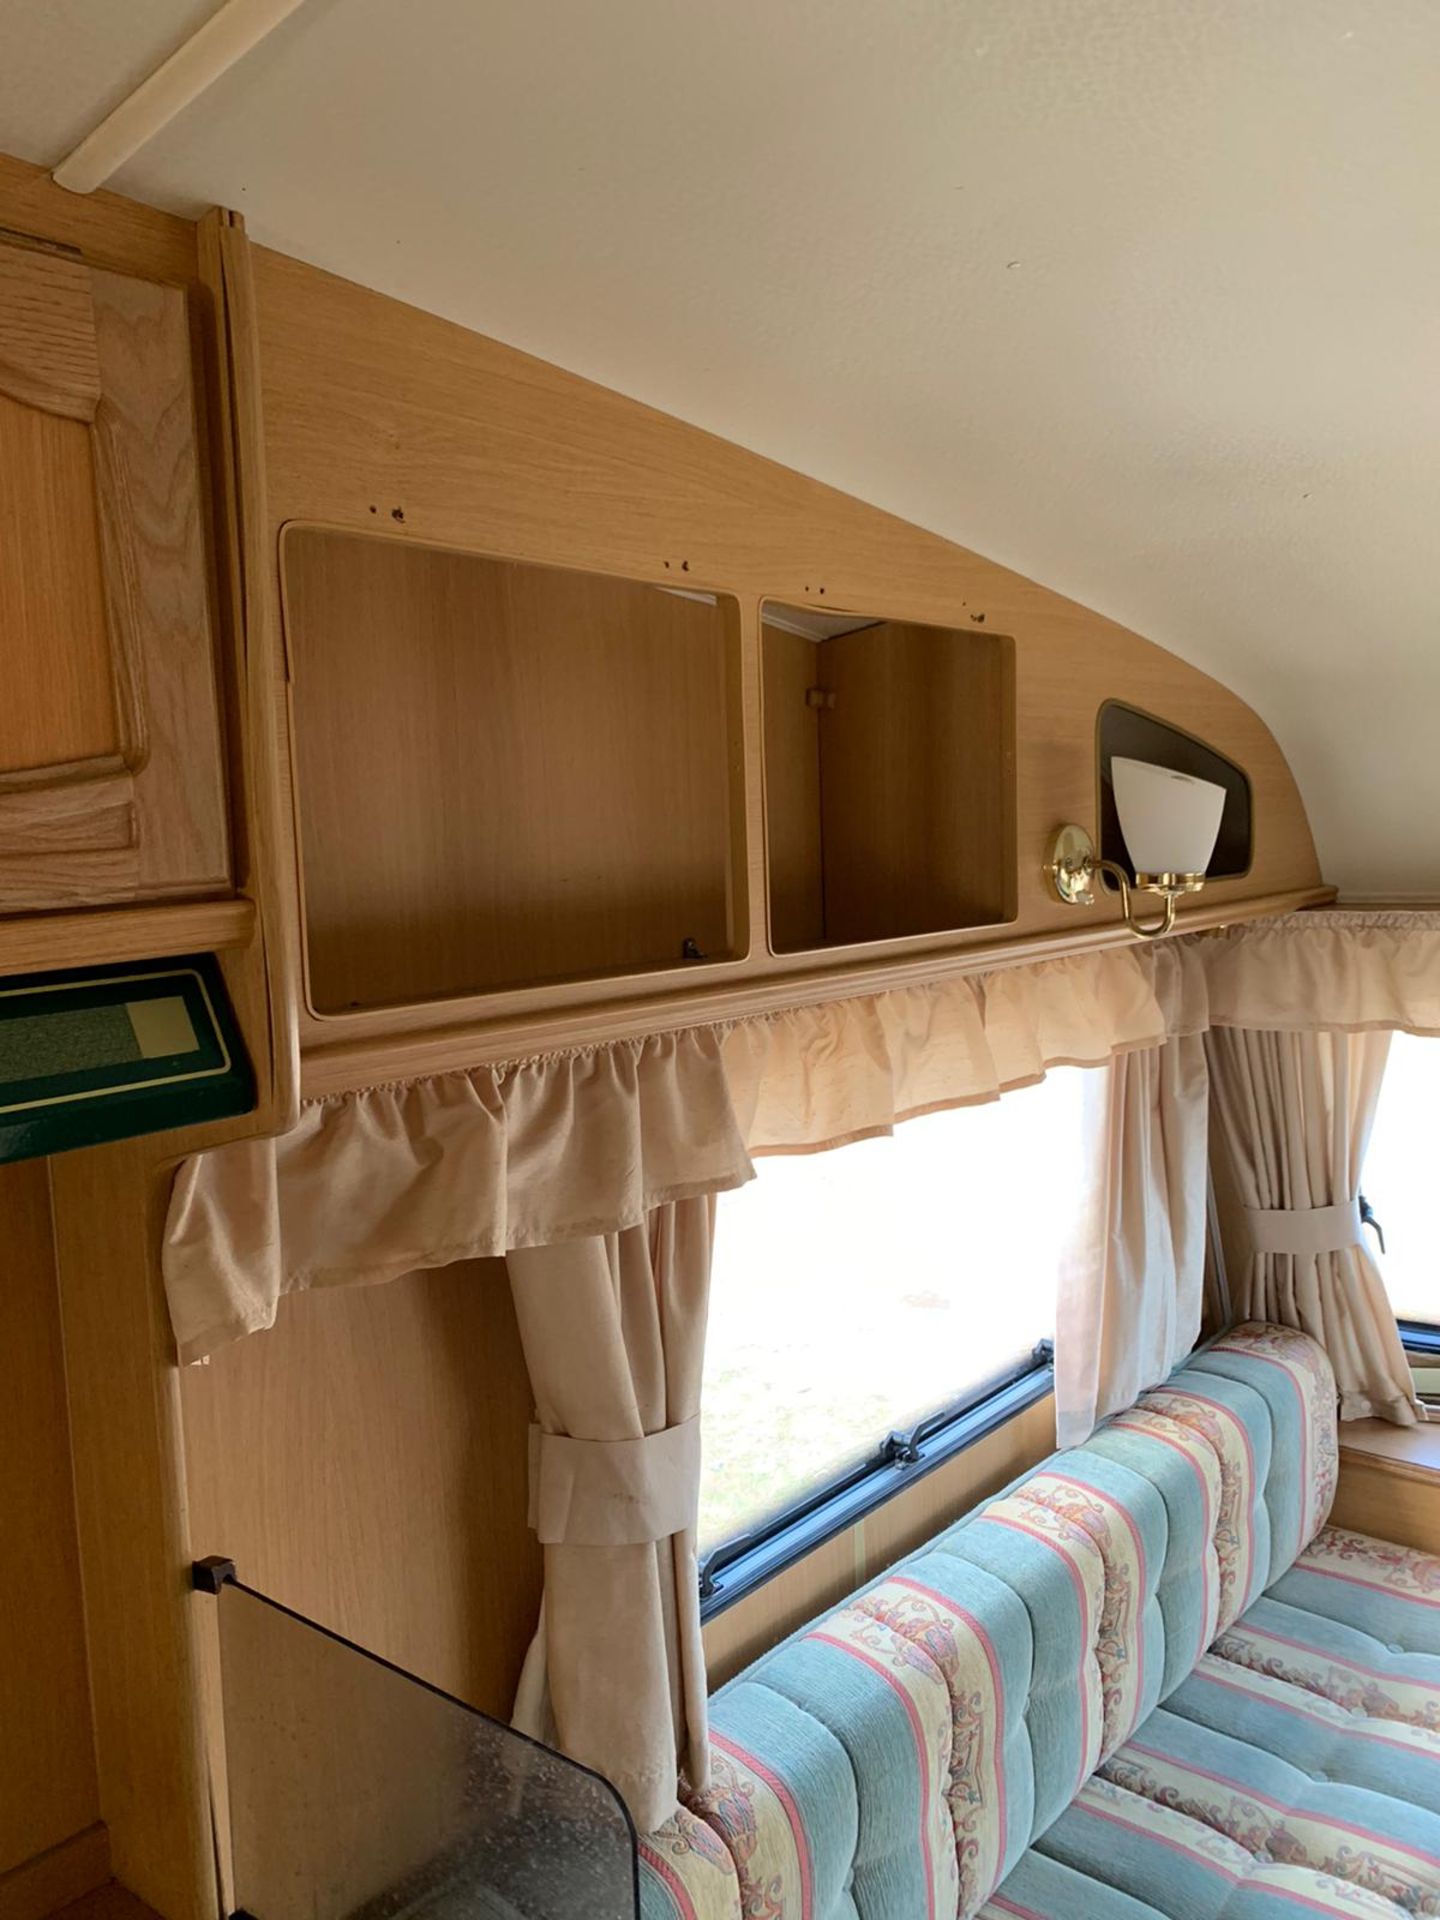 Northstar Award Twin Axle Four Berth Touring Caravan c/w End Bathroom - Image 11 of 14